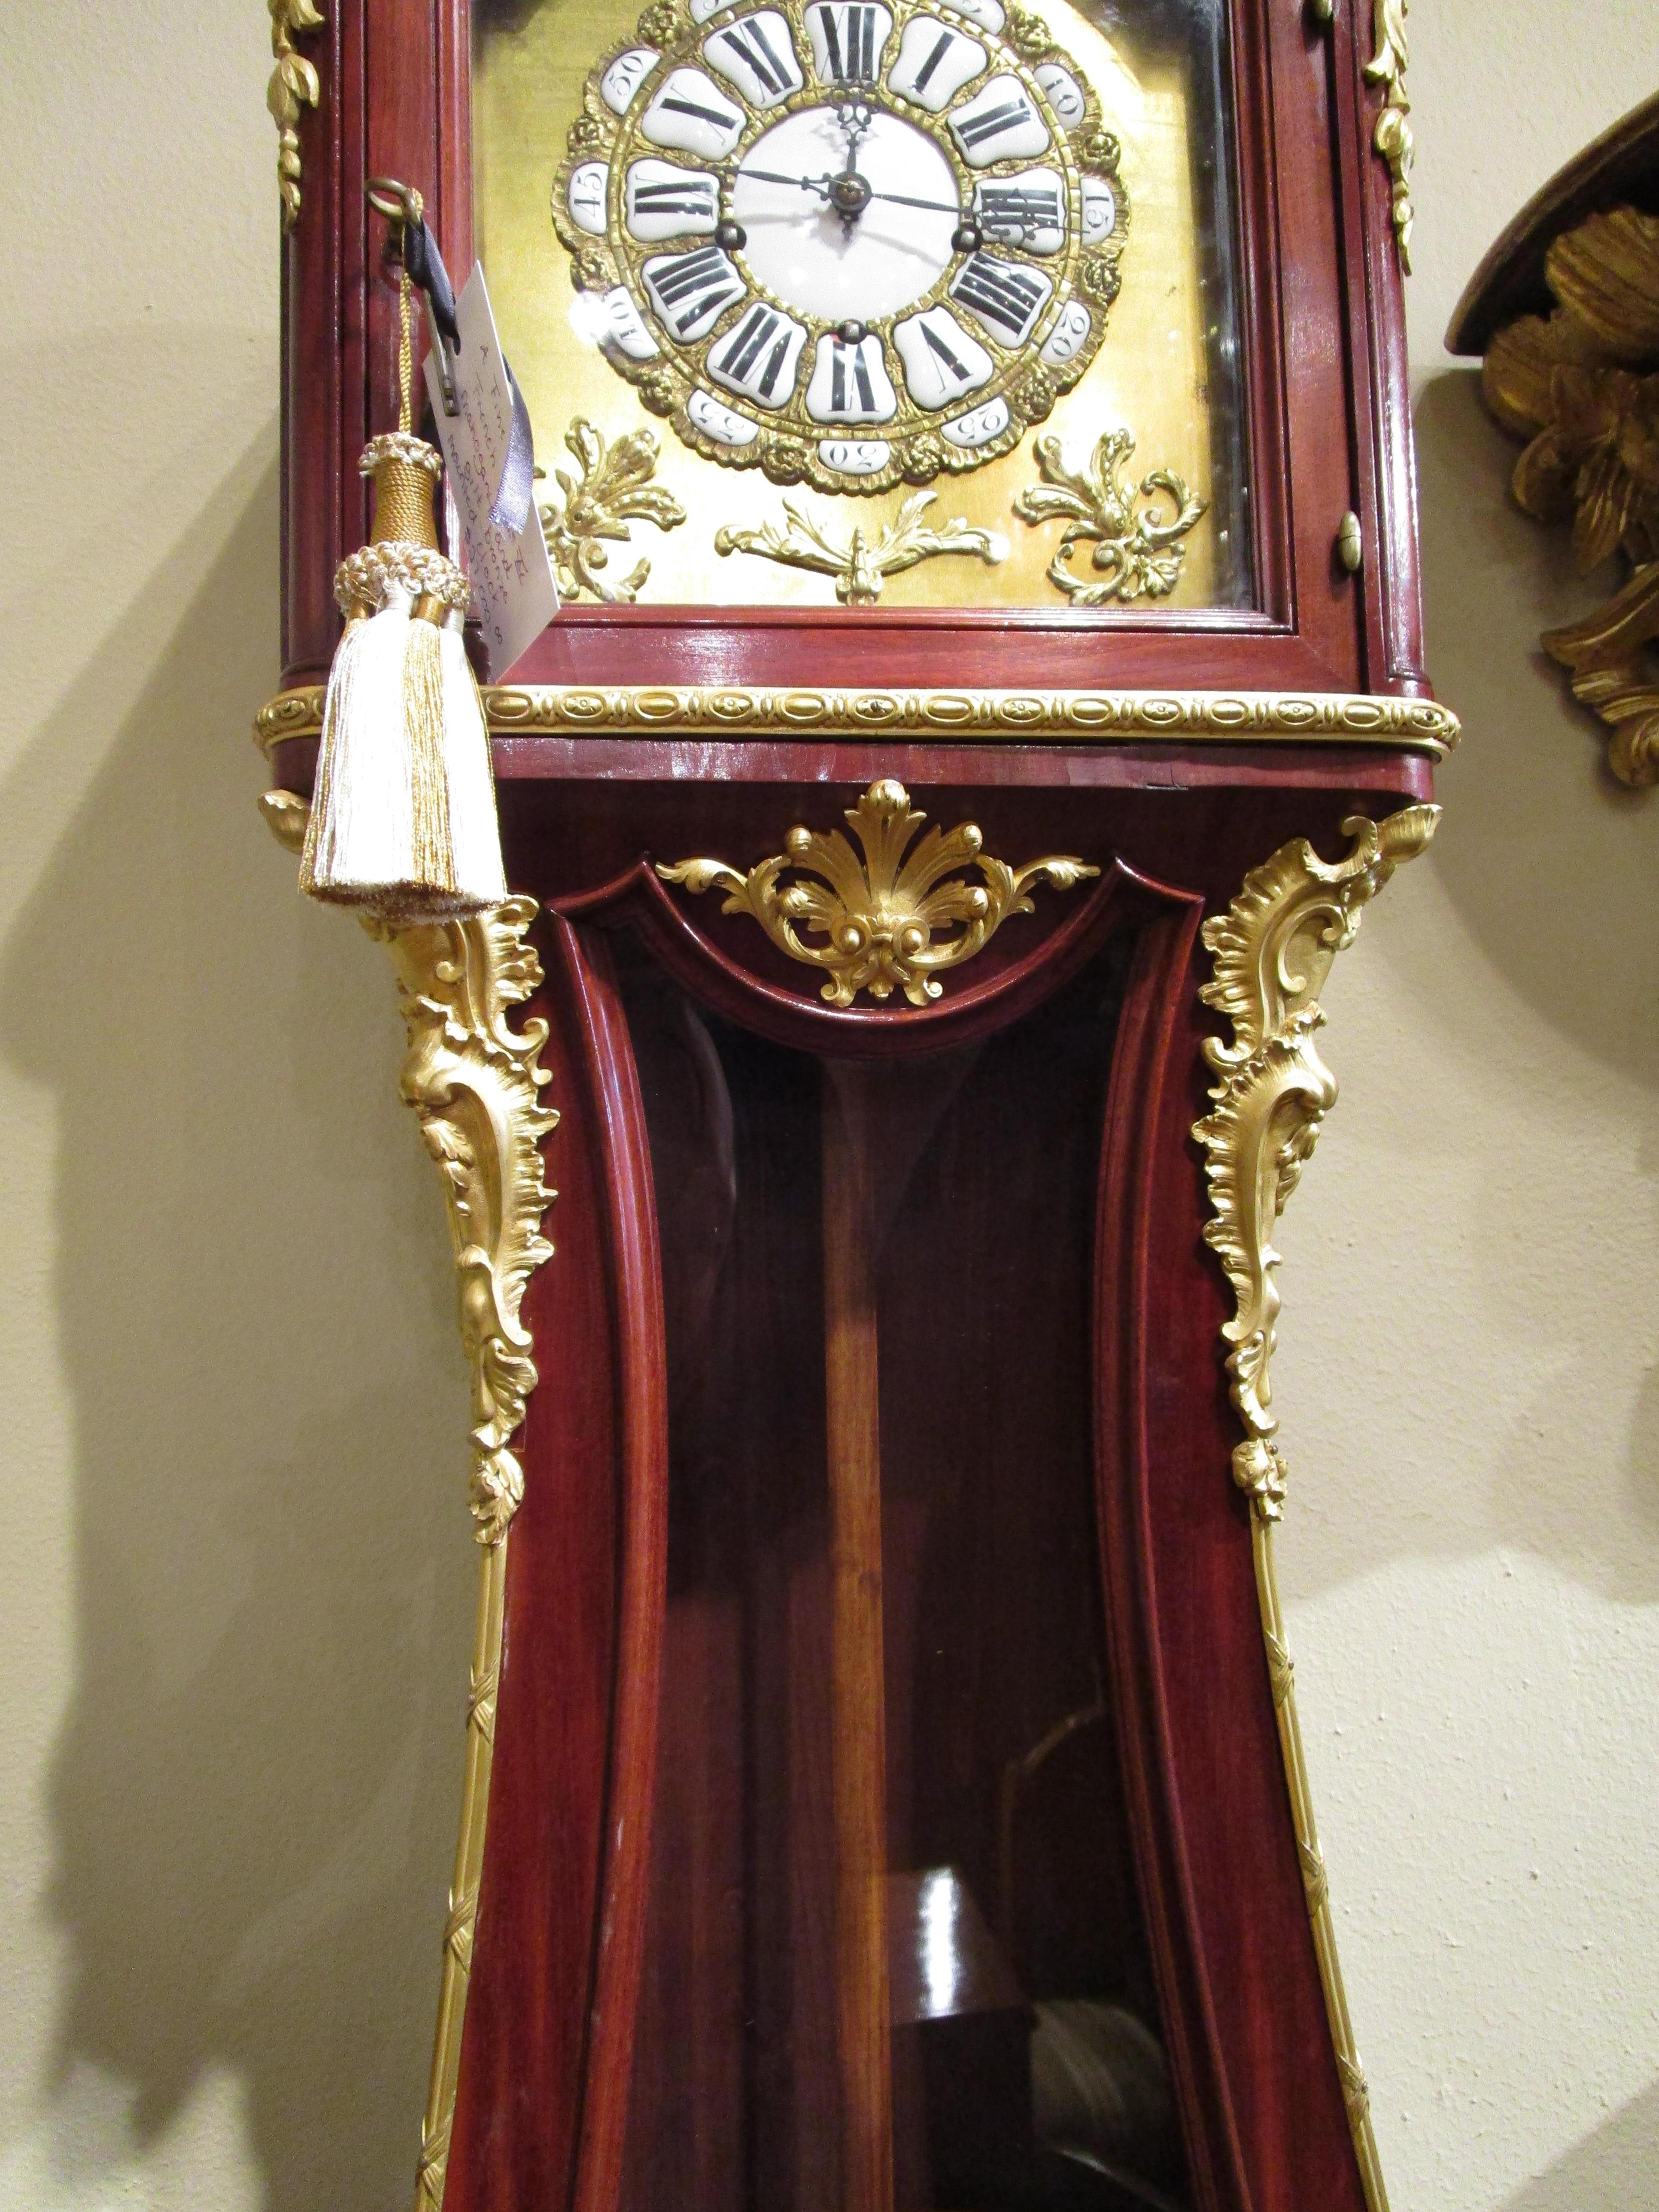 Français A  A.I.C., 19e siècle, acajou français  Horloge de grand-père incrustée de parquet. Bronze doré en vente